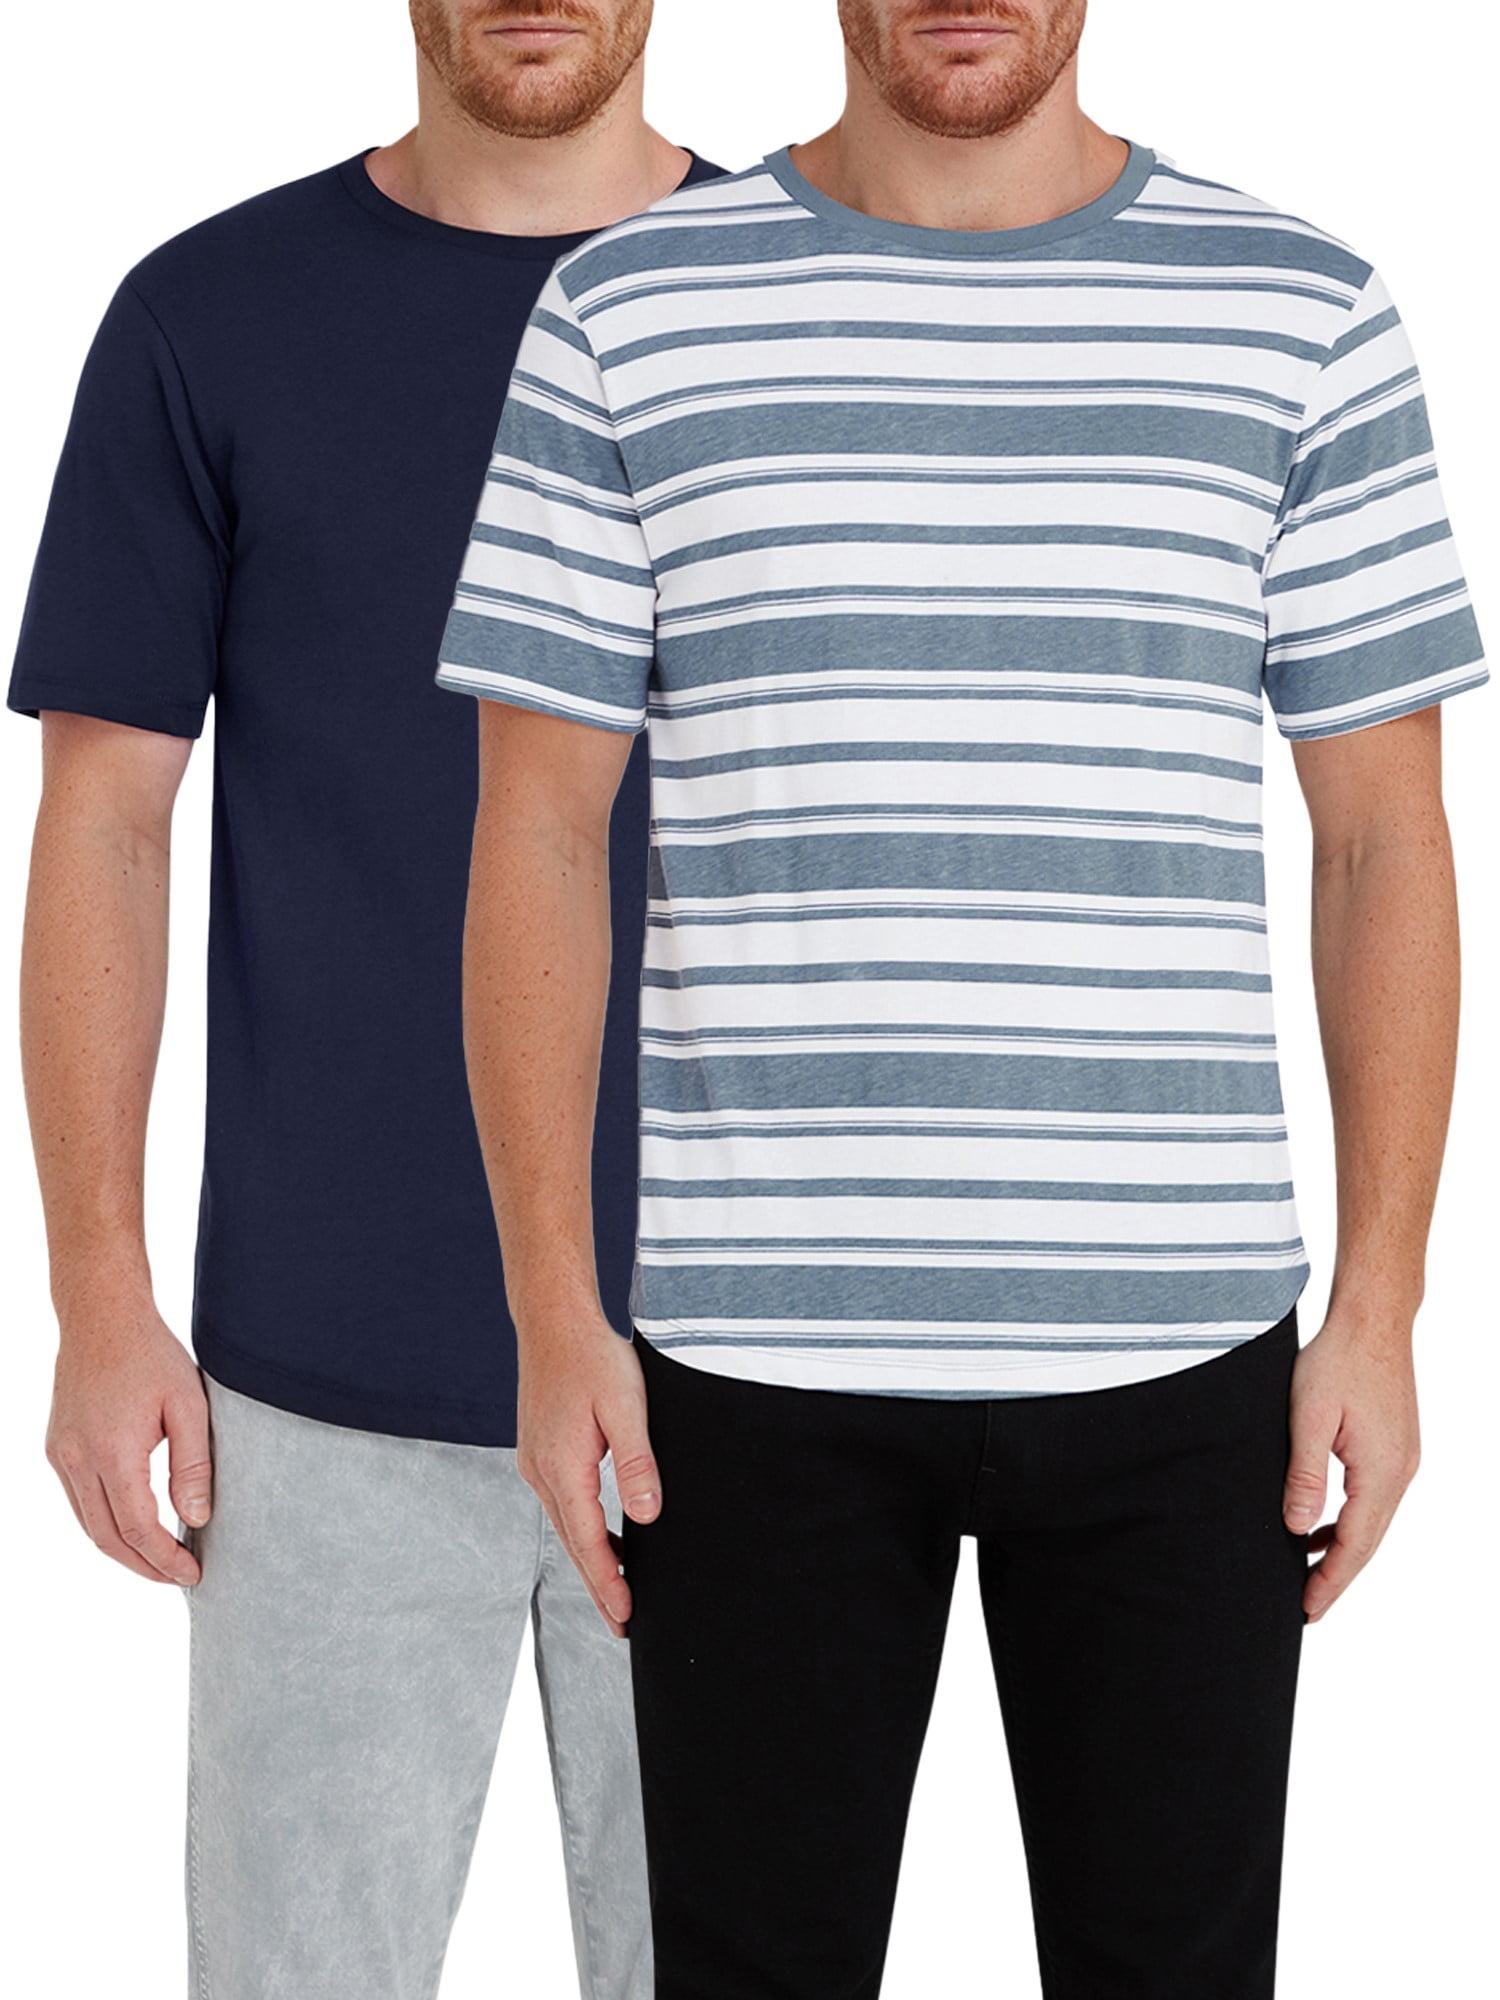 Men's T-Shirts & Tops - Shop online